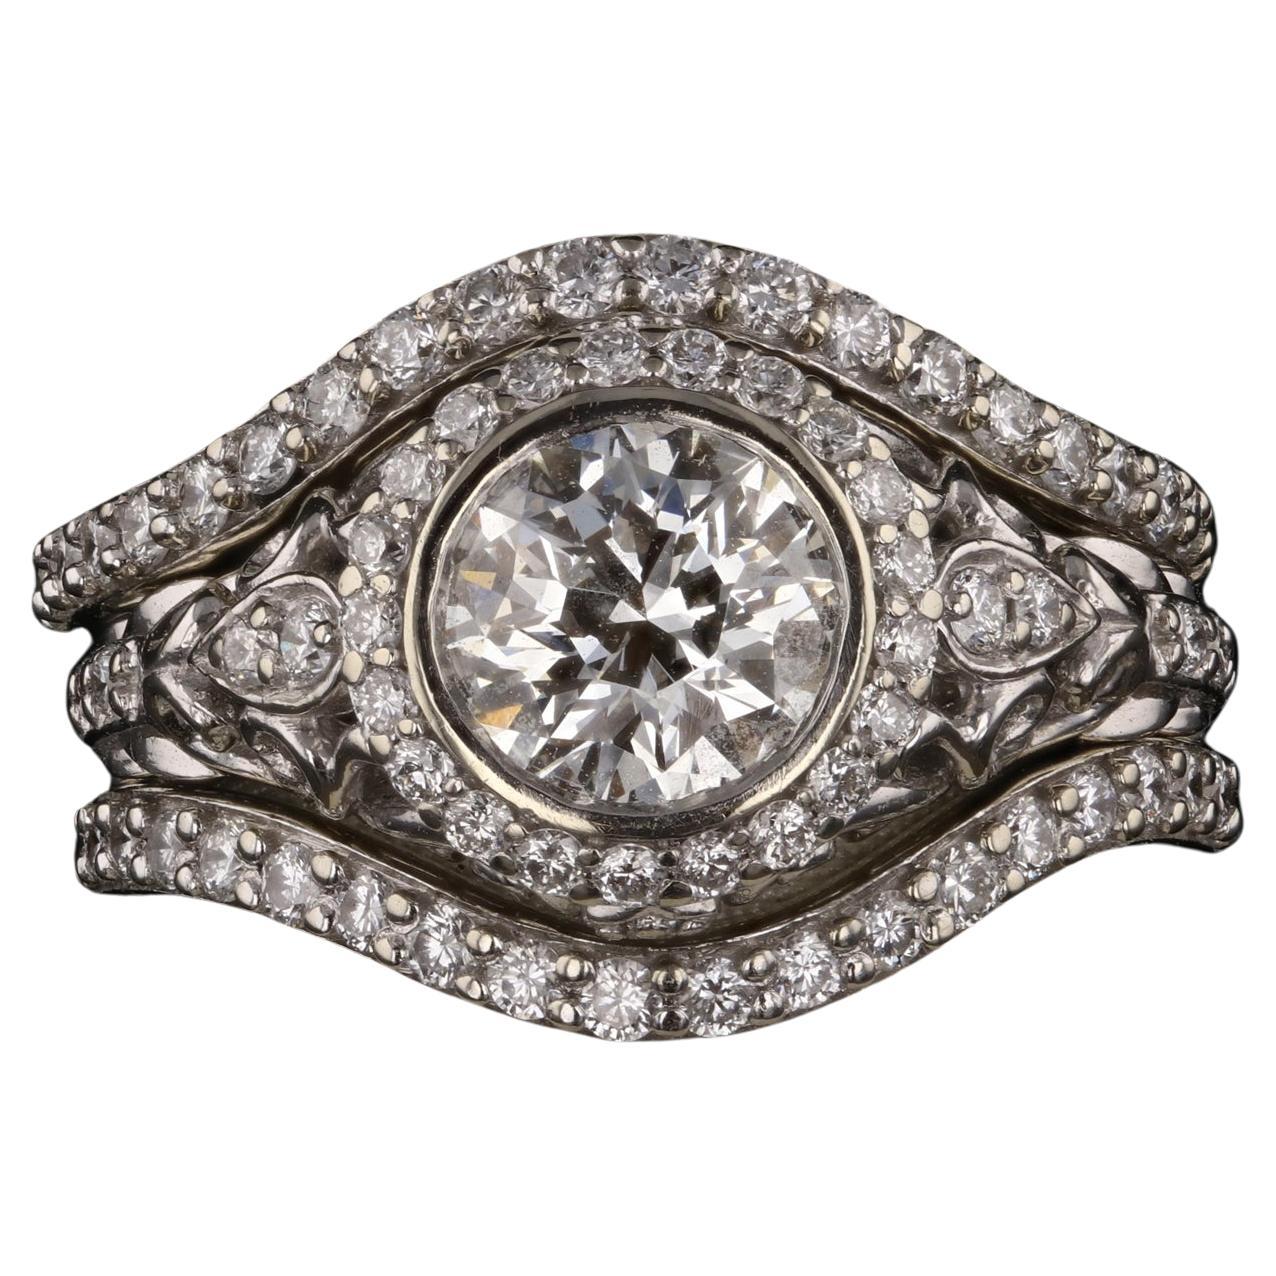 Vintage Inspired 1.13ct Round Diamond & Halo Pave Diamond Engagement Ring Set 